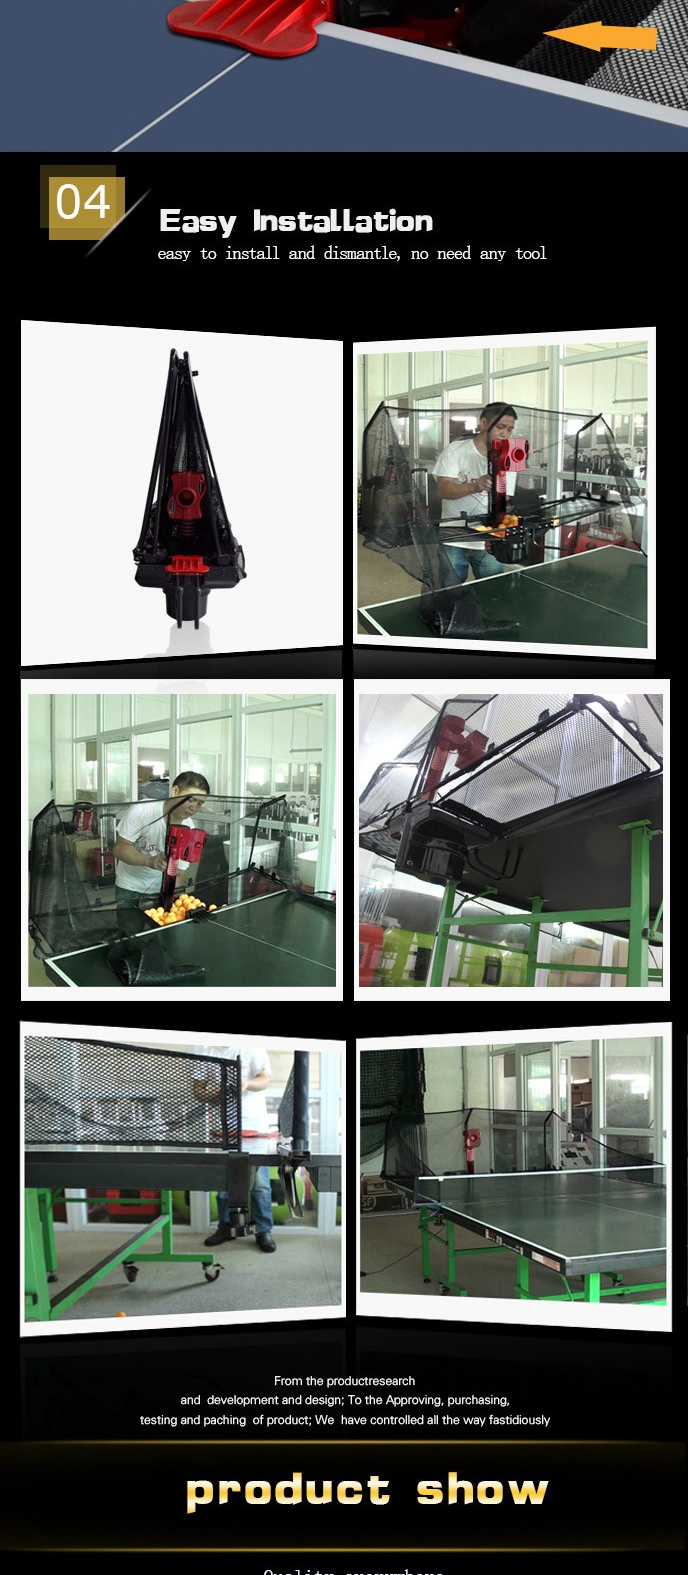 Ping pong hotsale che gioca macchina robot in vendita D899